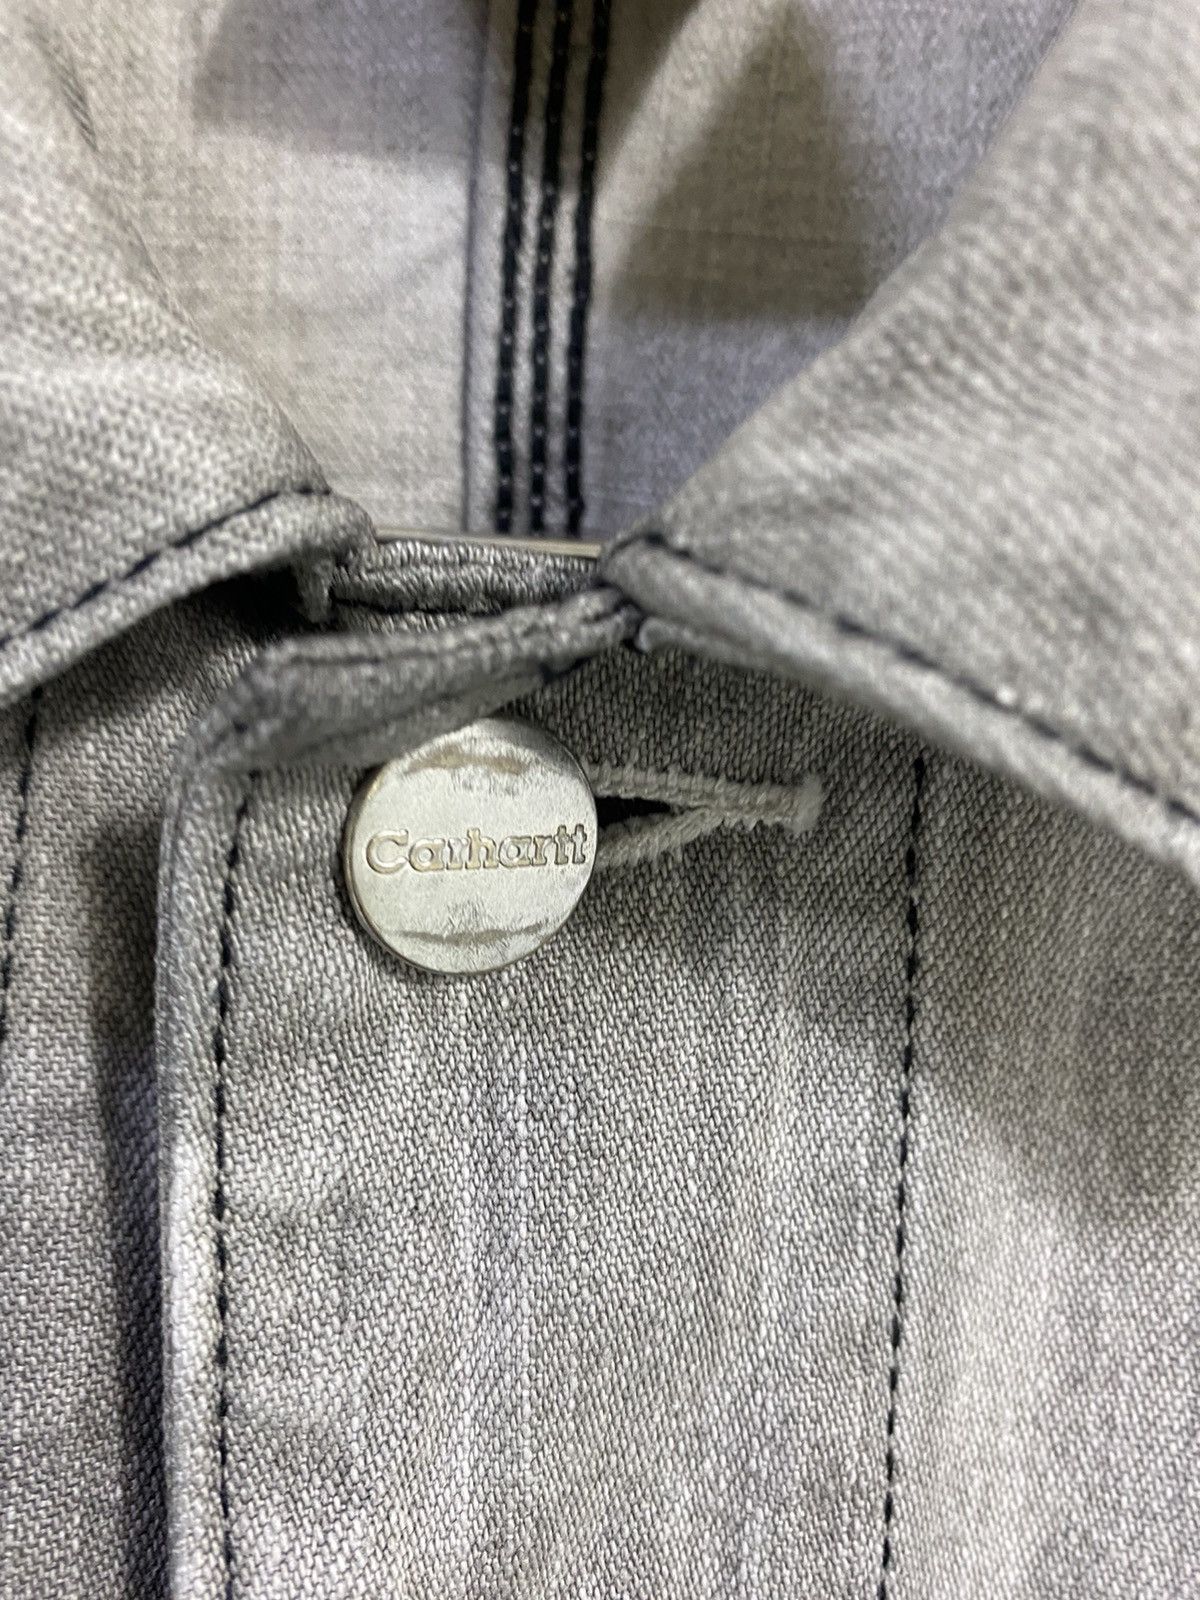 Carhartt Chore Jacket Four Pocket Design Button Up - 5